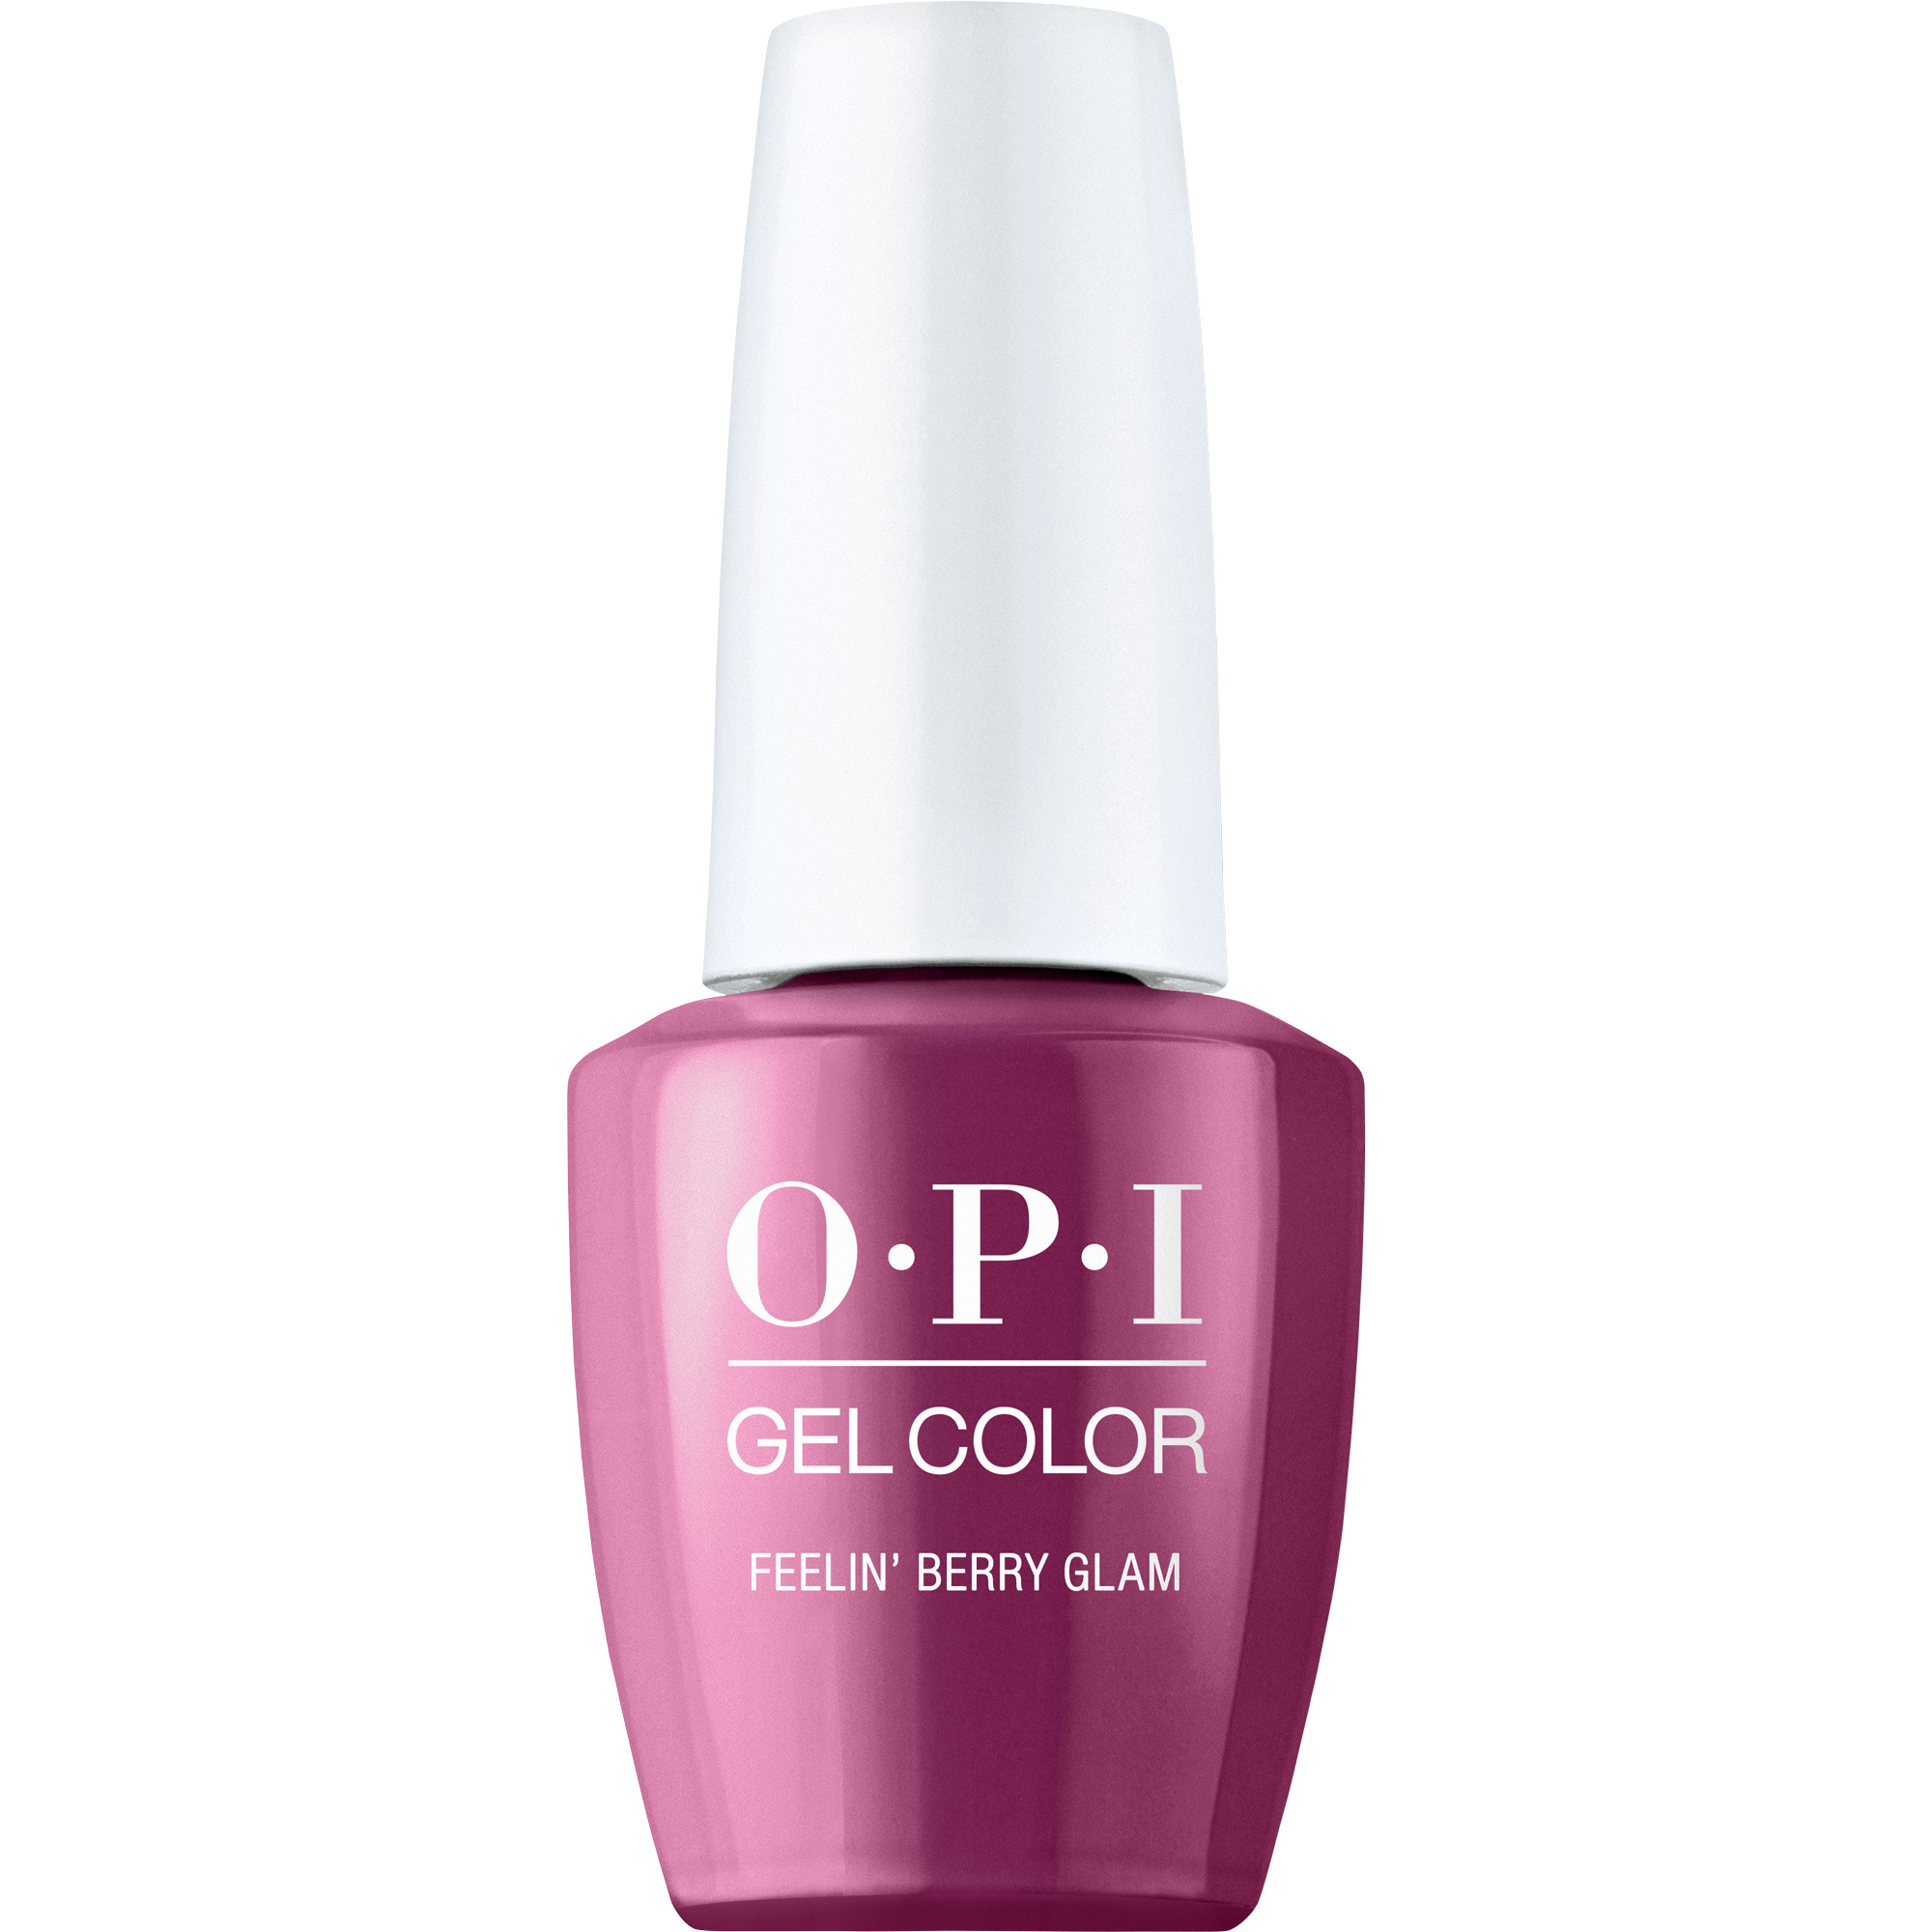 OPI Gel Color 360 - Feelin’ Berry Glam